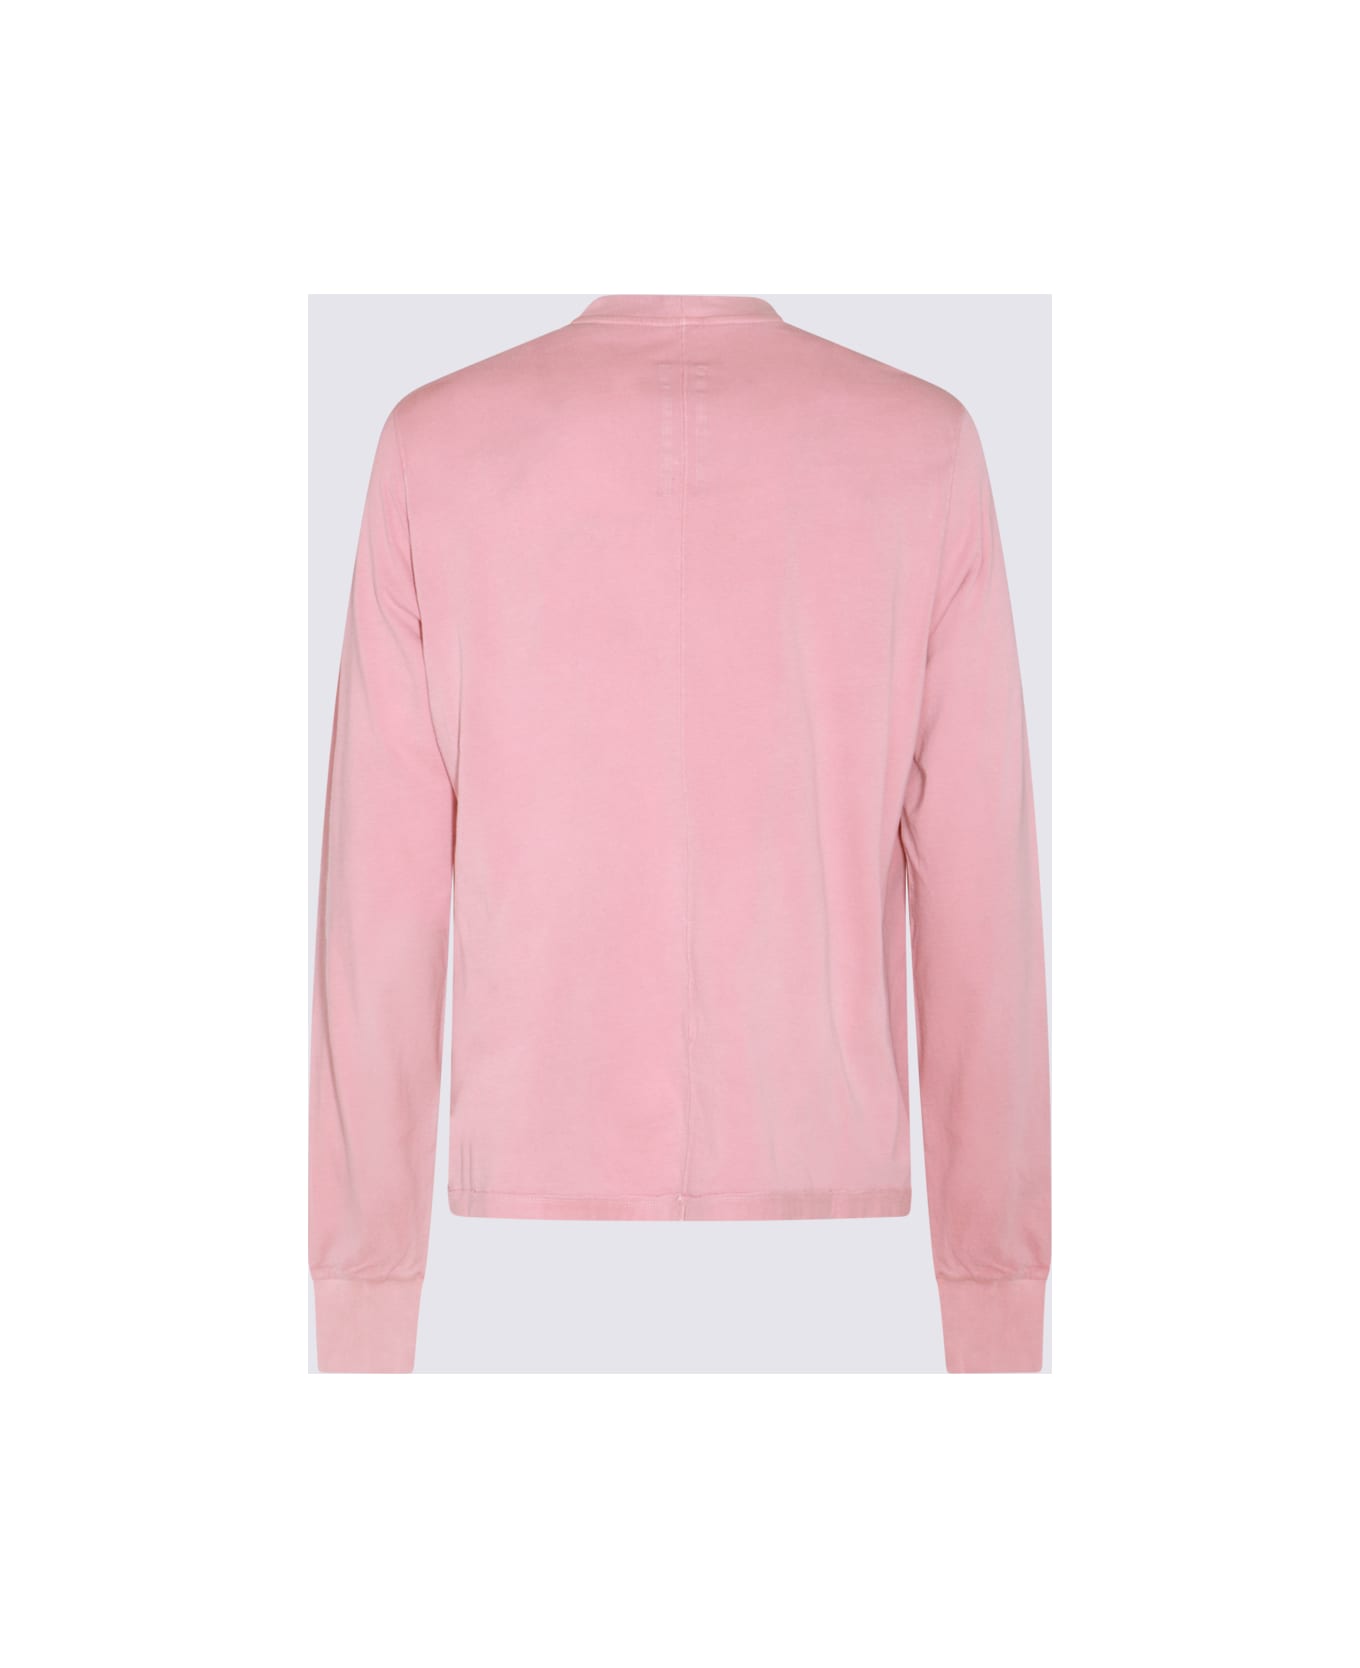 DRKSHDW Pink Cotton Sweatshirt - Pink ニットウェア